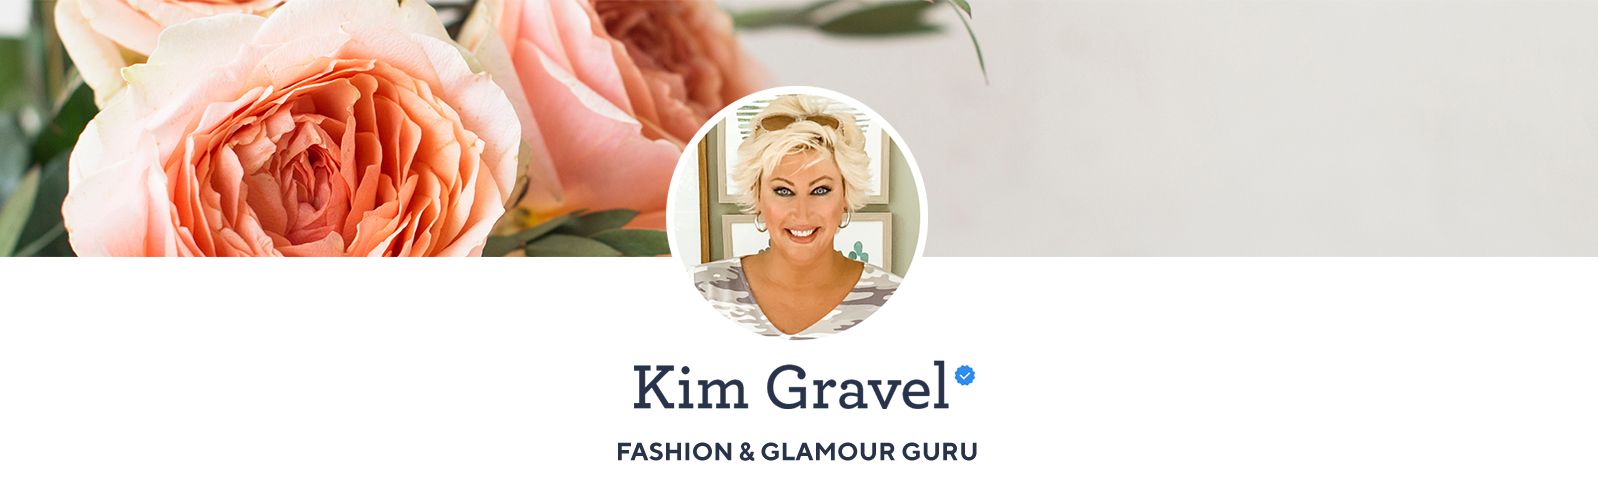 Kim Gravel - Fashion & Glamour Guru